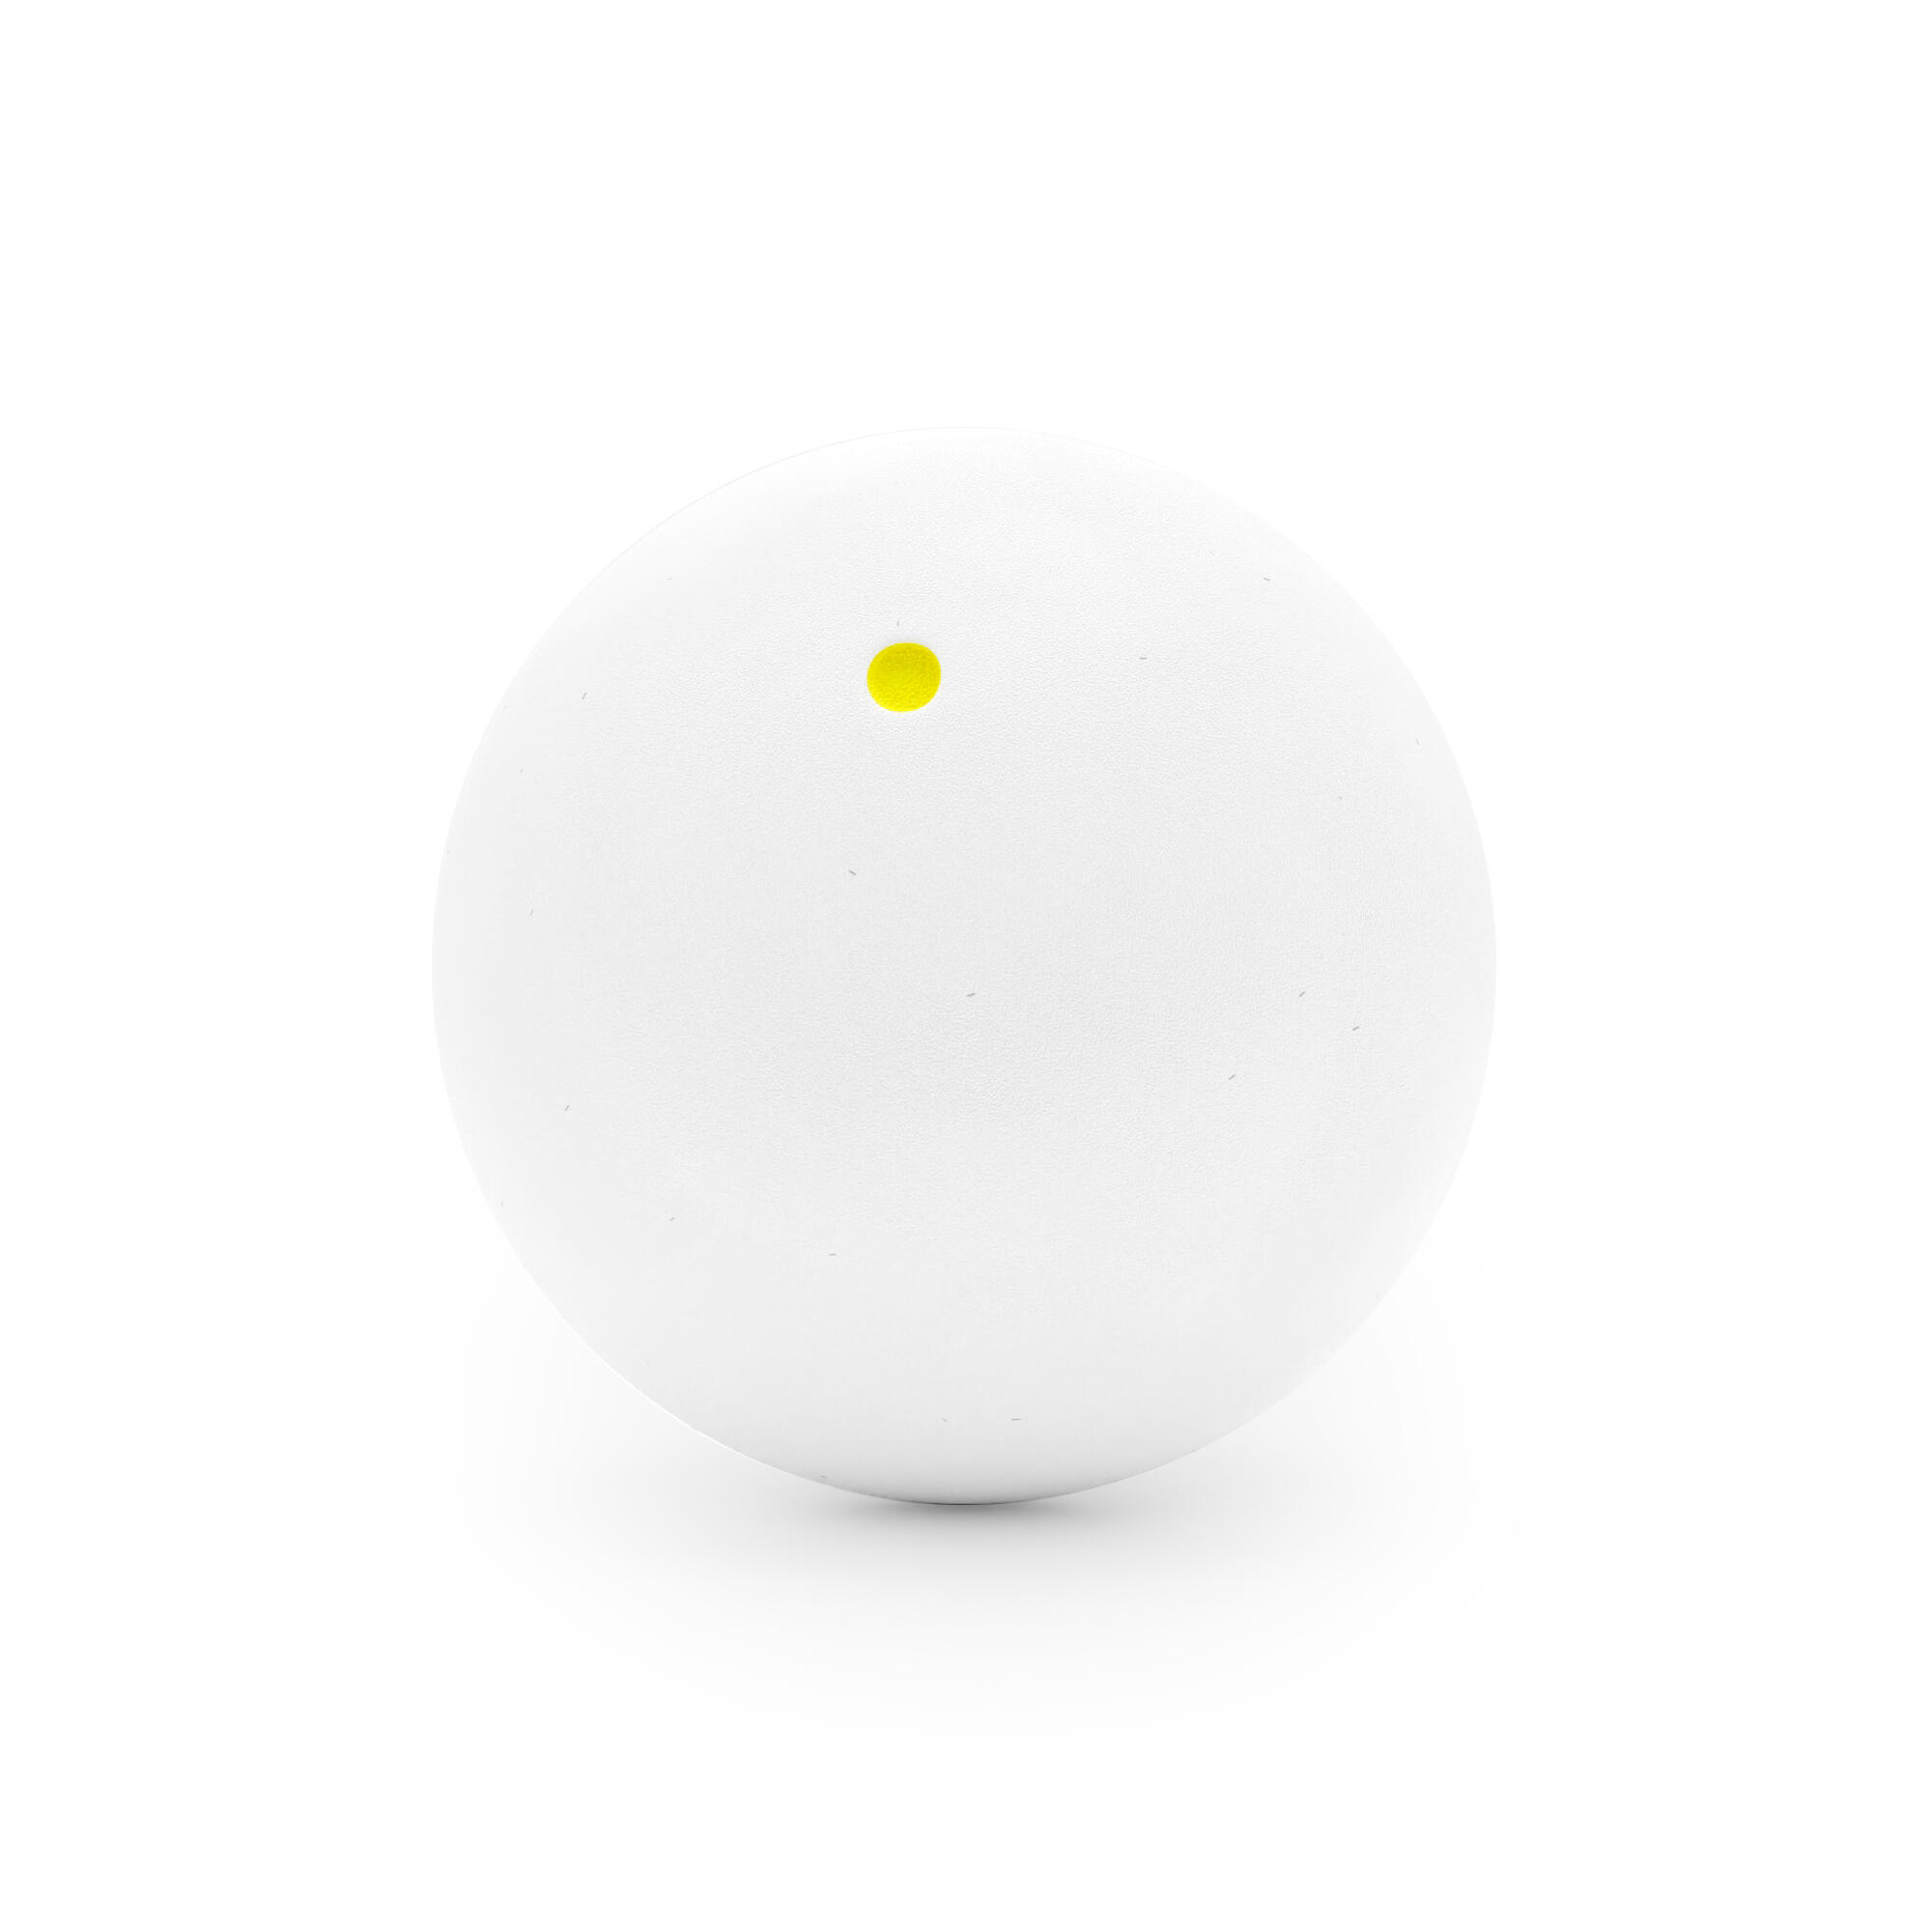 Squash Ball SB 960 Yellow Dot - White 1/2